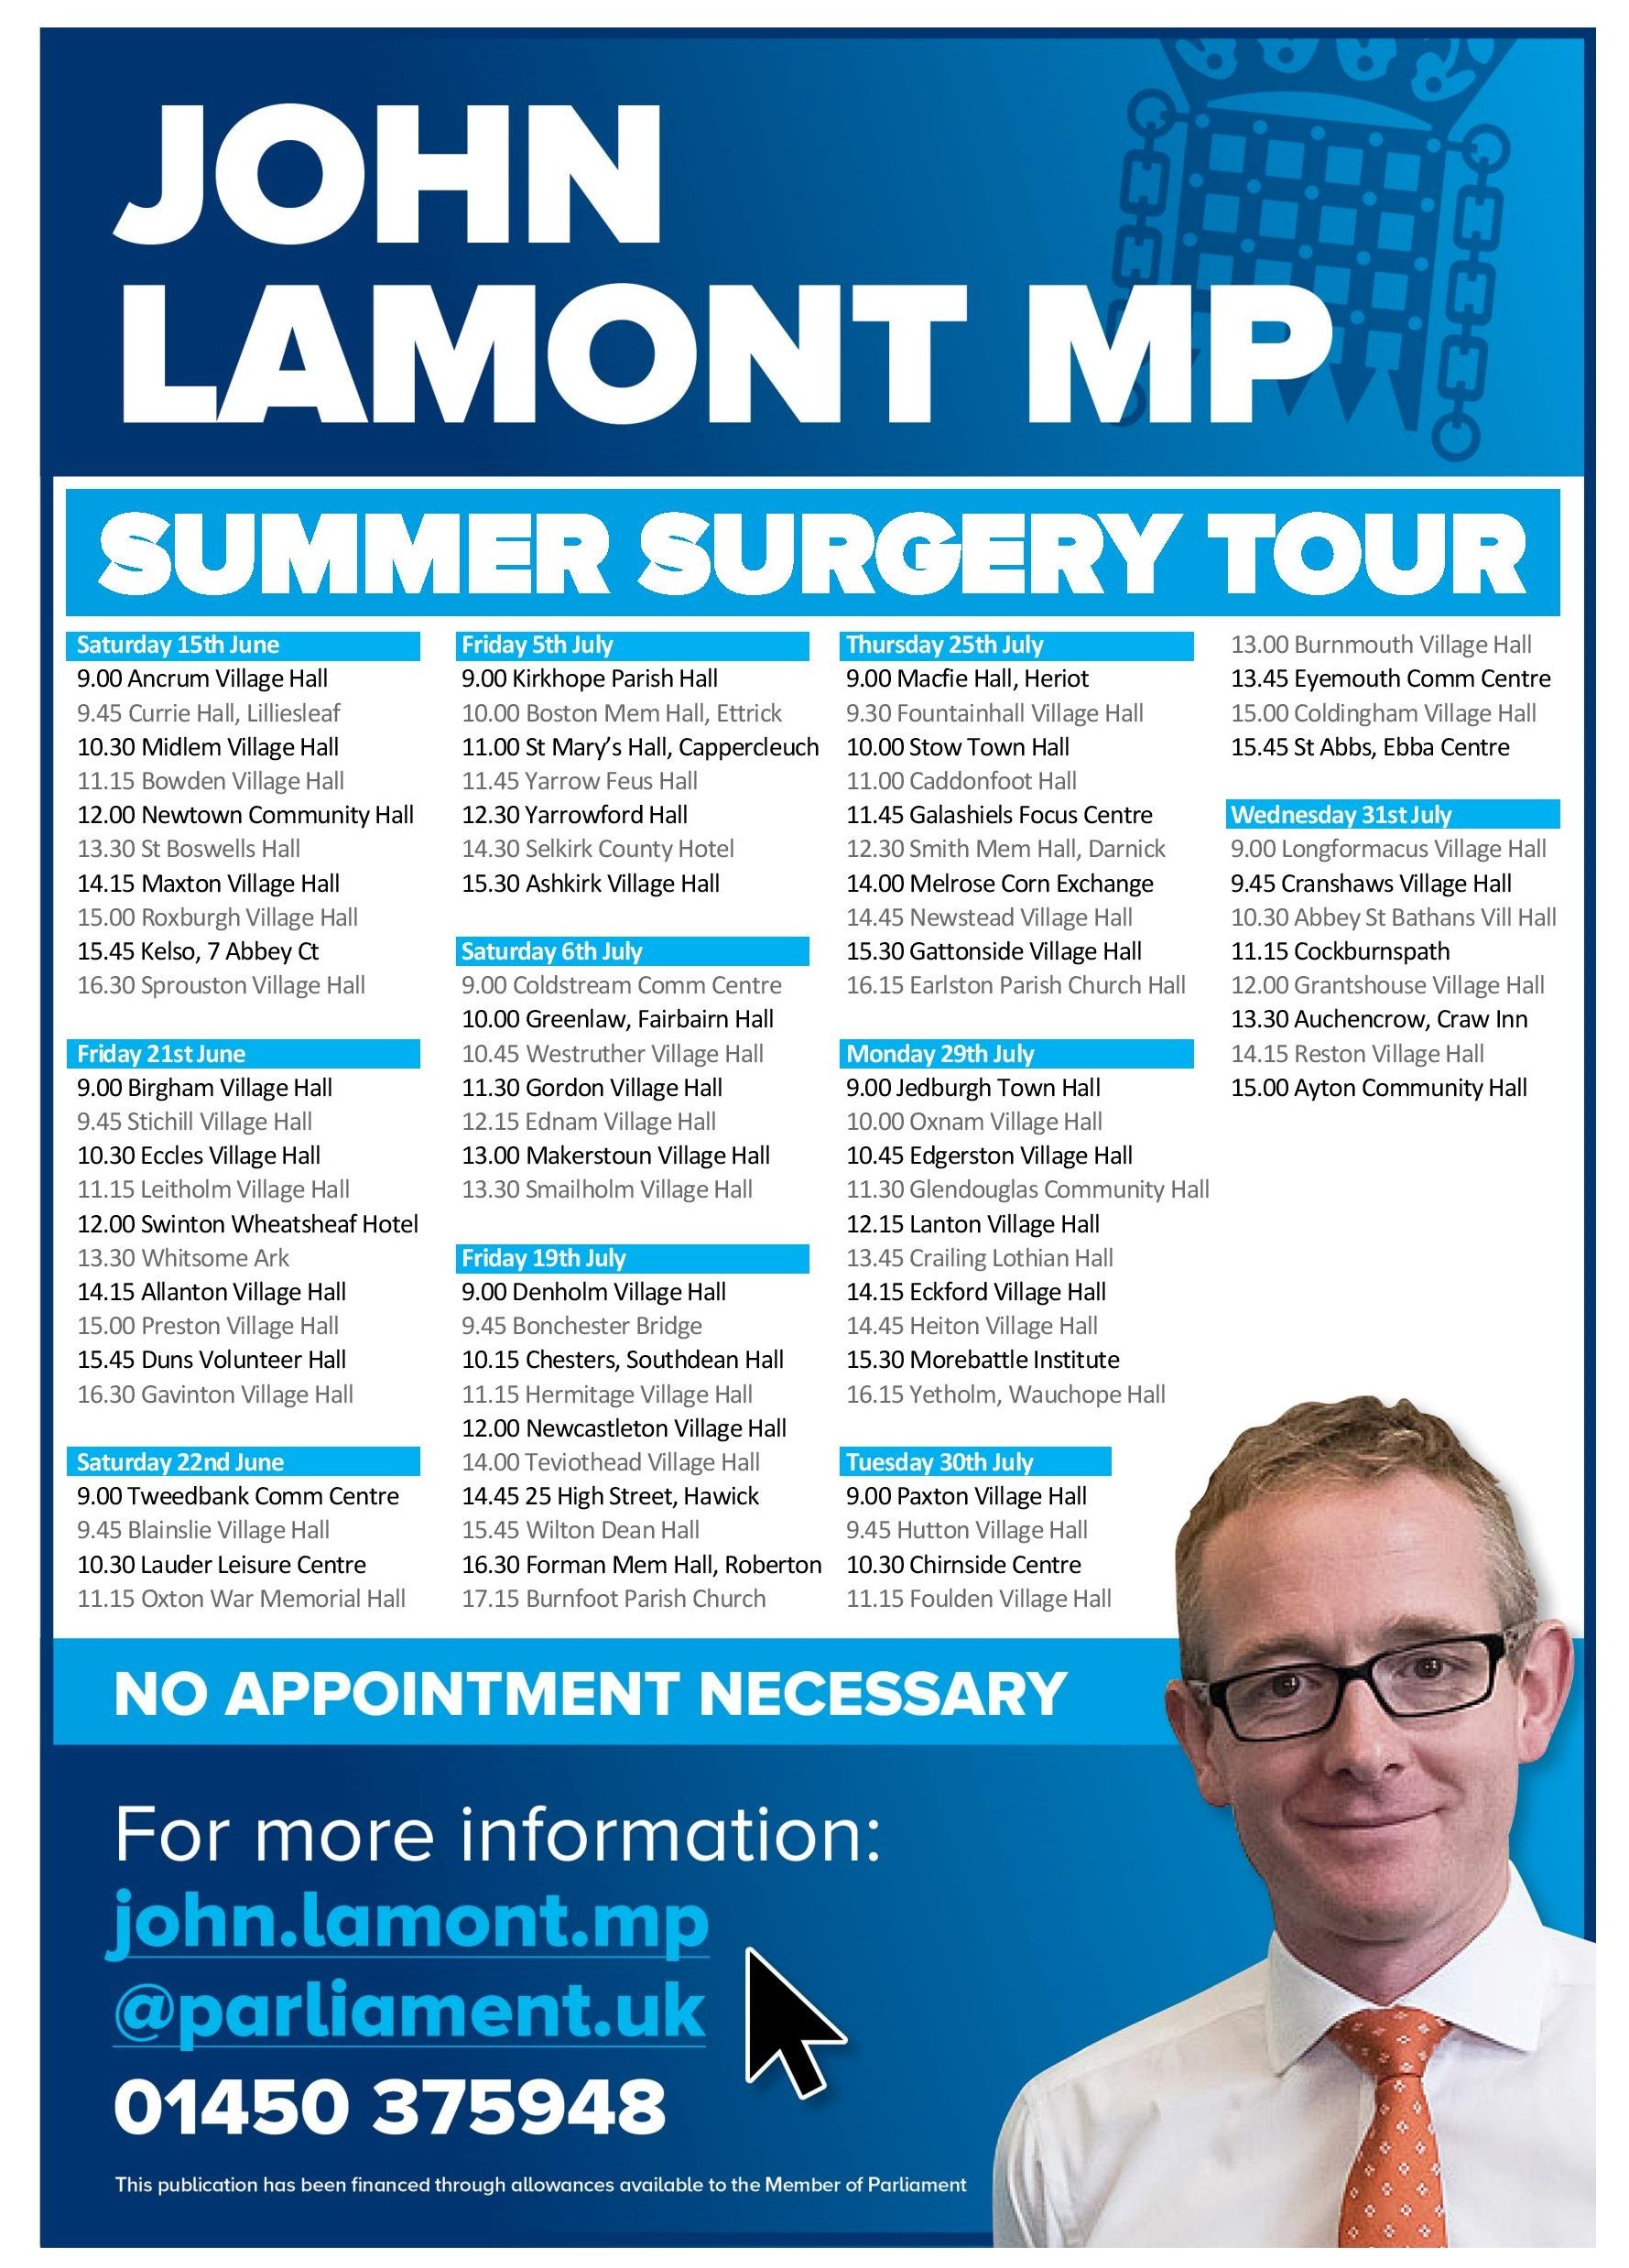 Summer Surgery Tour 2019 John Lamont MP